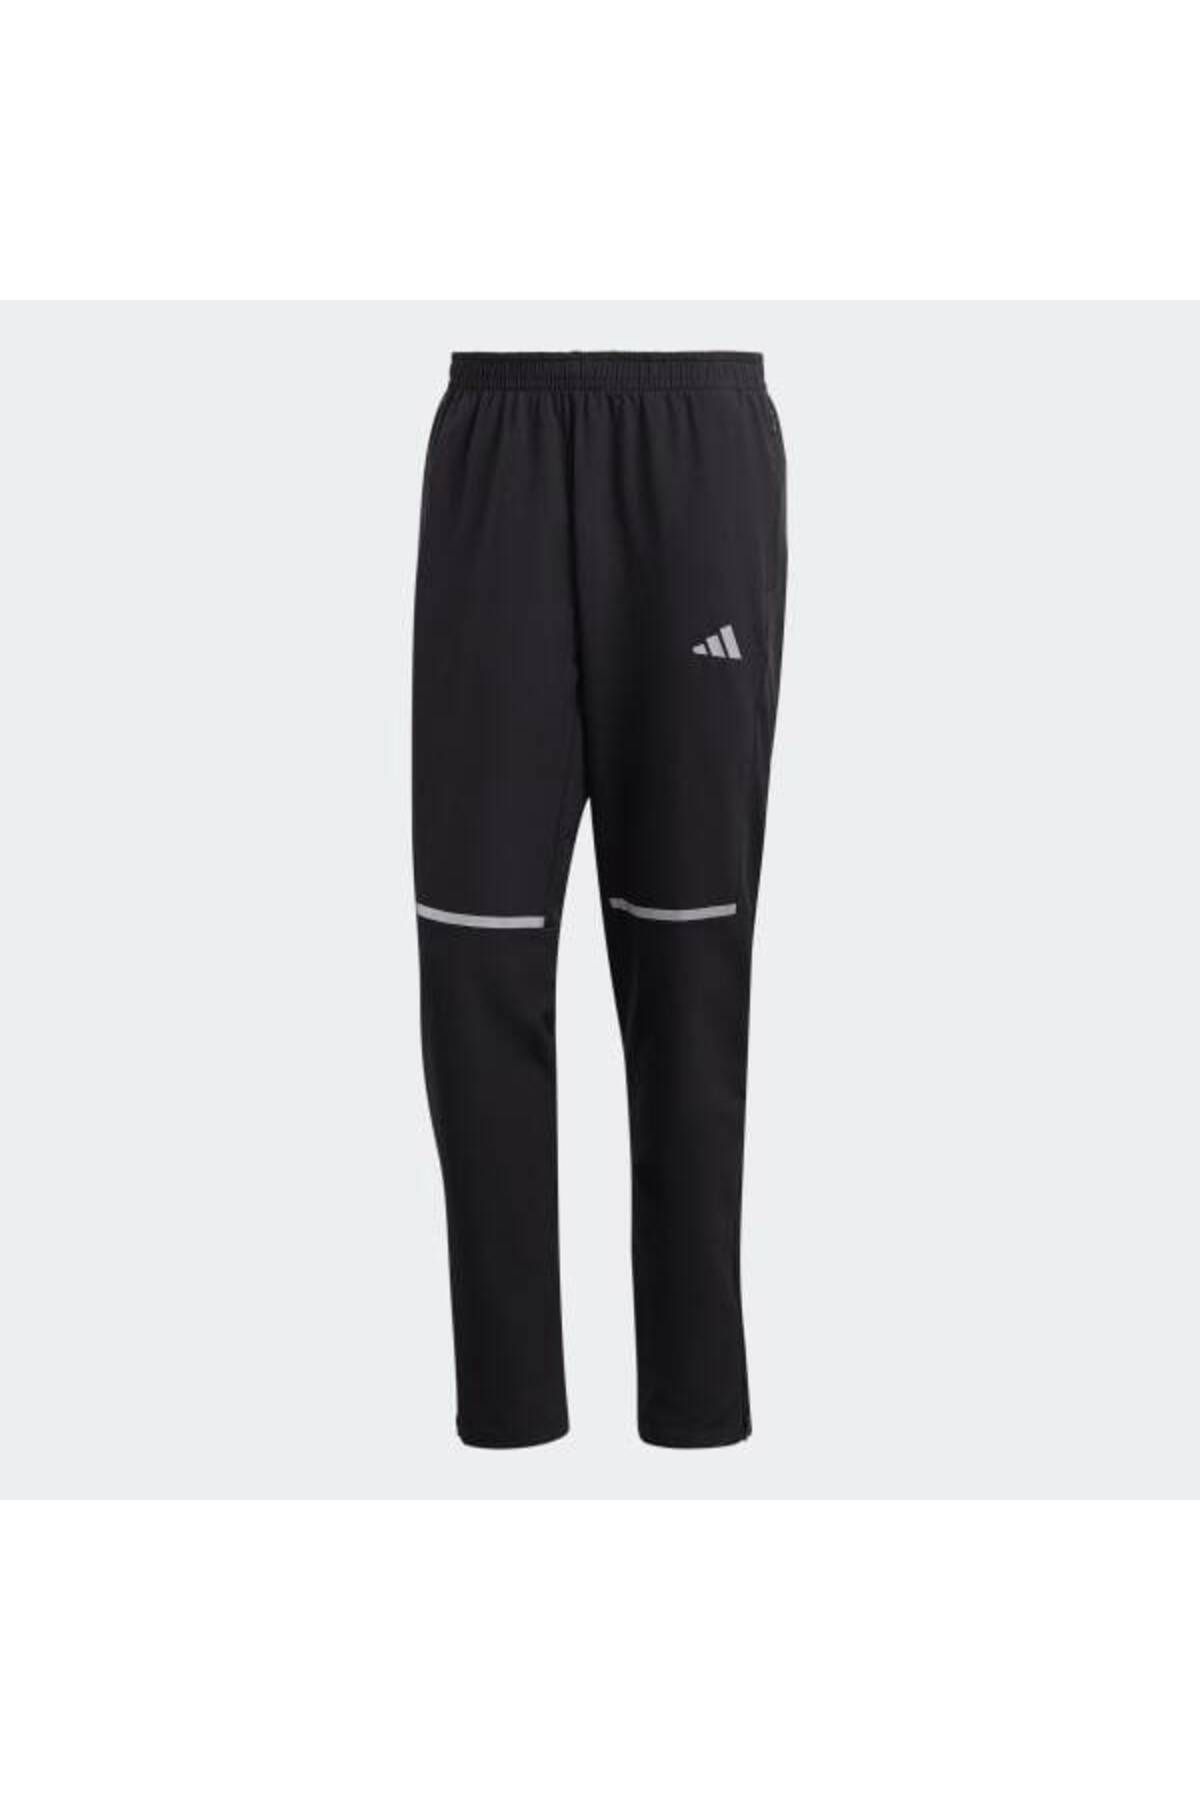 adidas Men's Training and Running Pants Otr Shell Pant Hm8441 - Trendyol